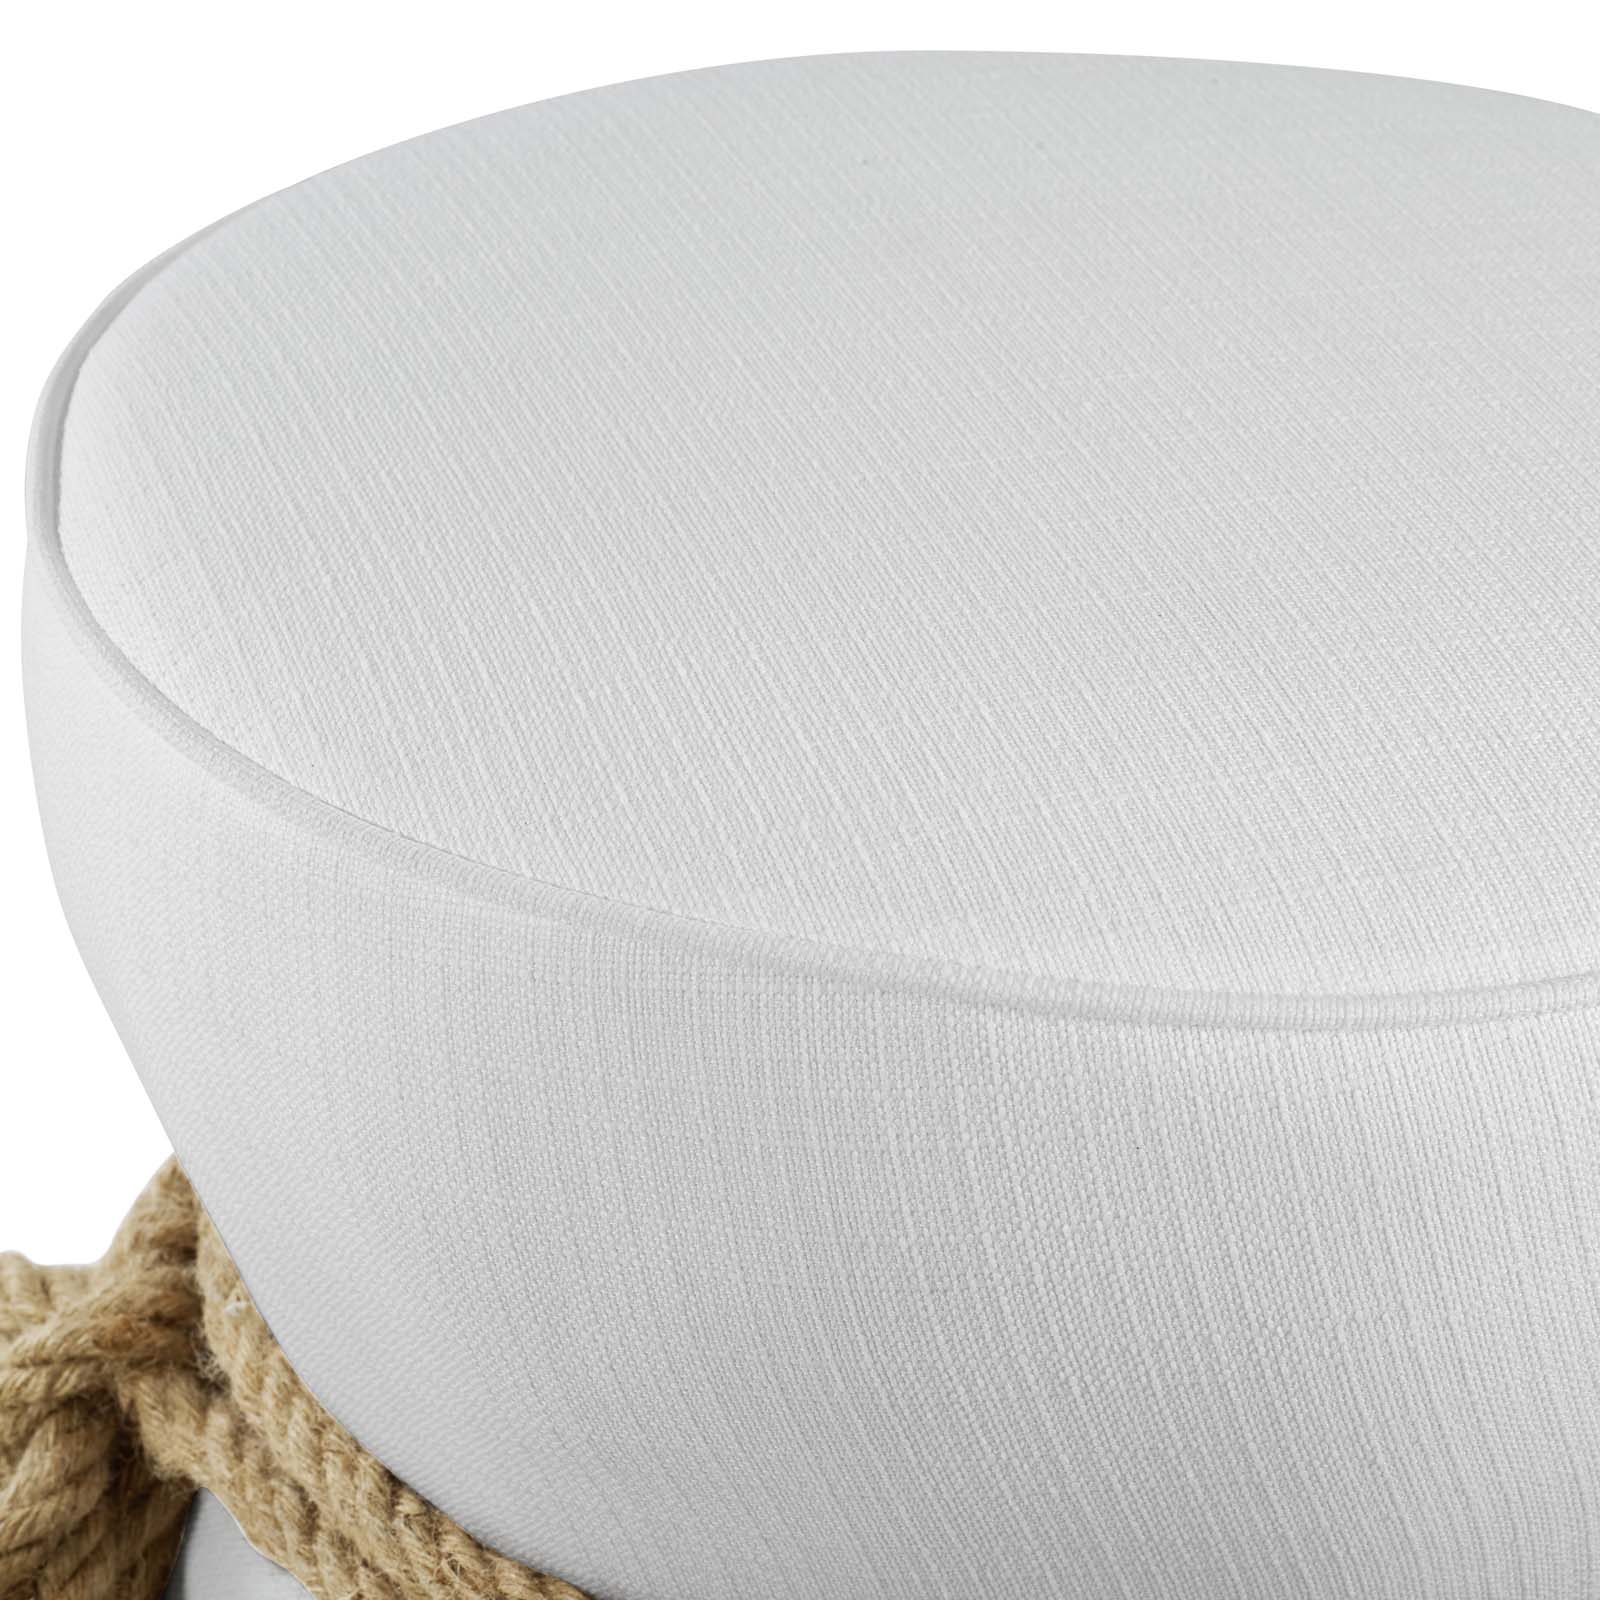 Beat Nautical Rope Upholstered Fabric Ottoman - East Shore Modern Home Furnishings